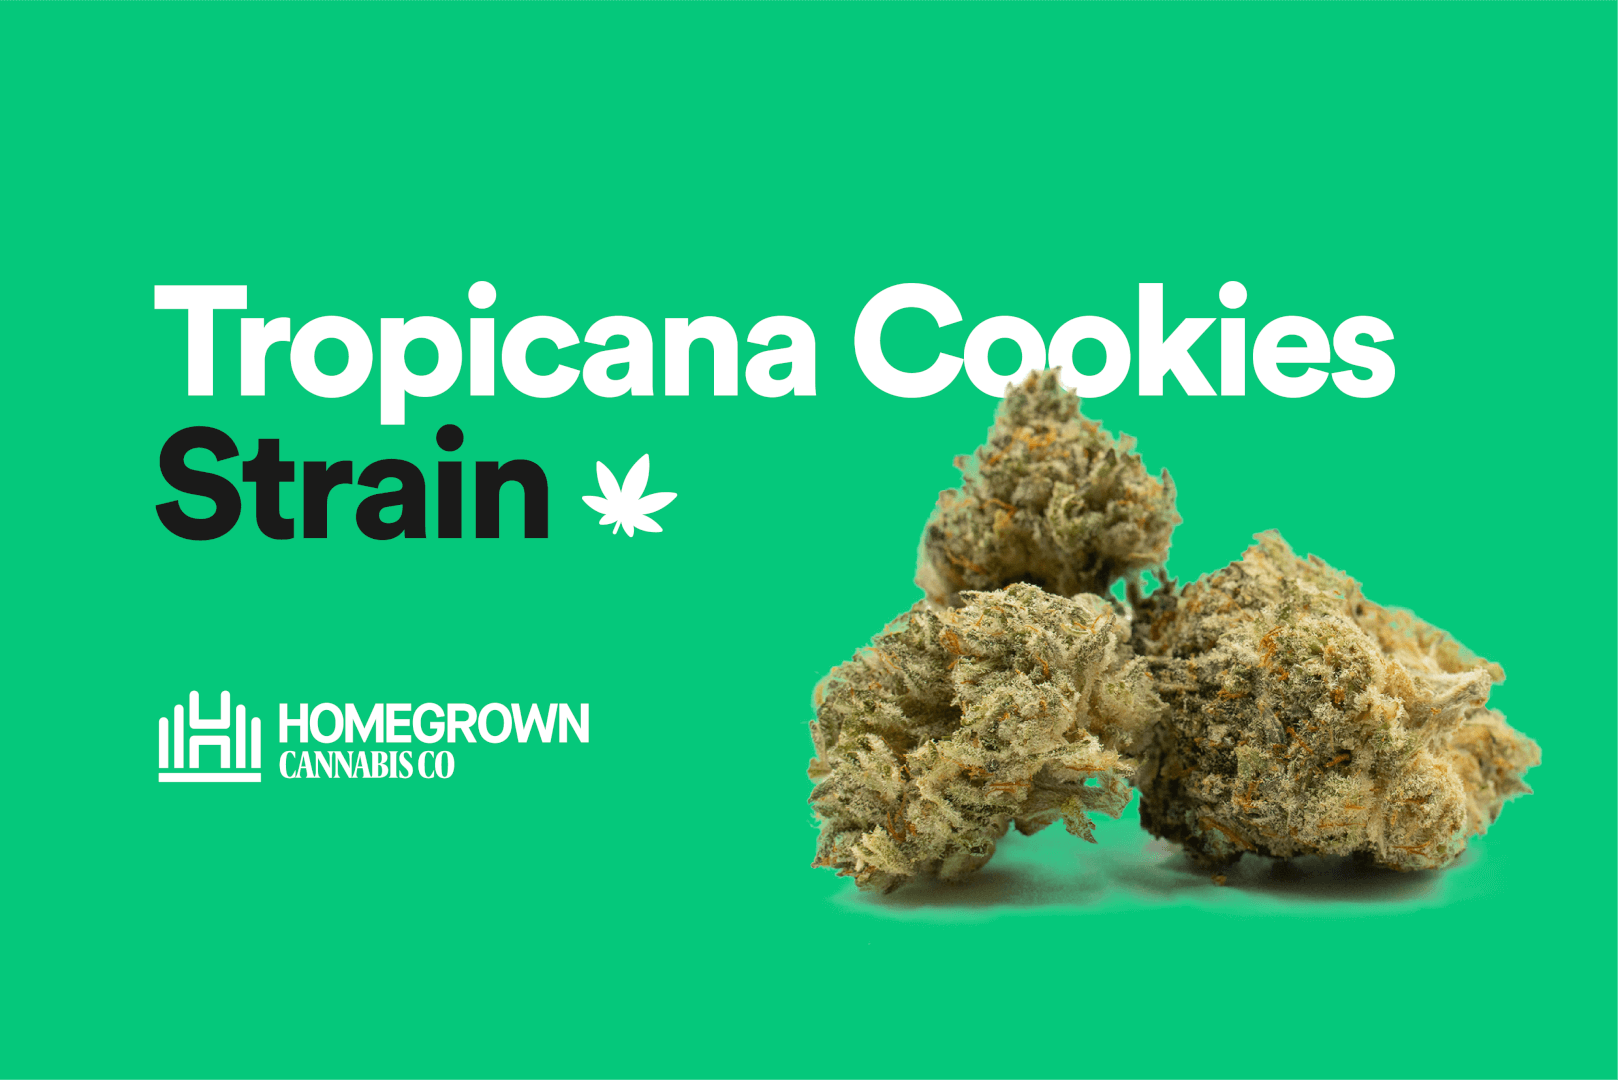 Tropicana Cookies strain